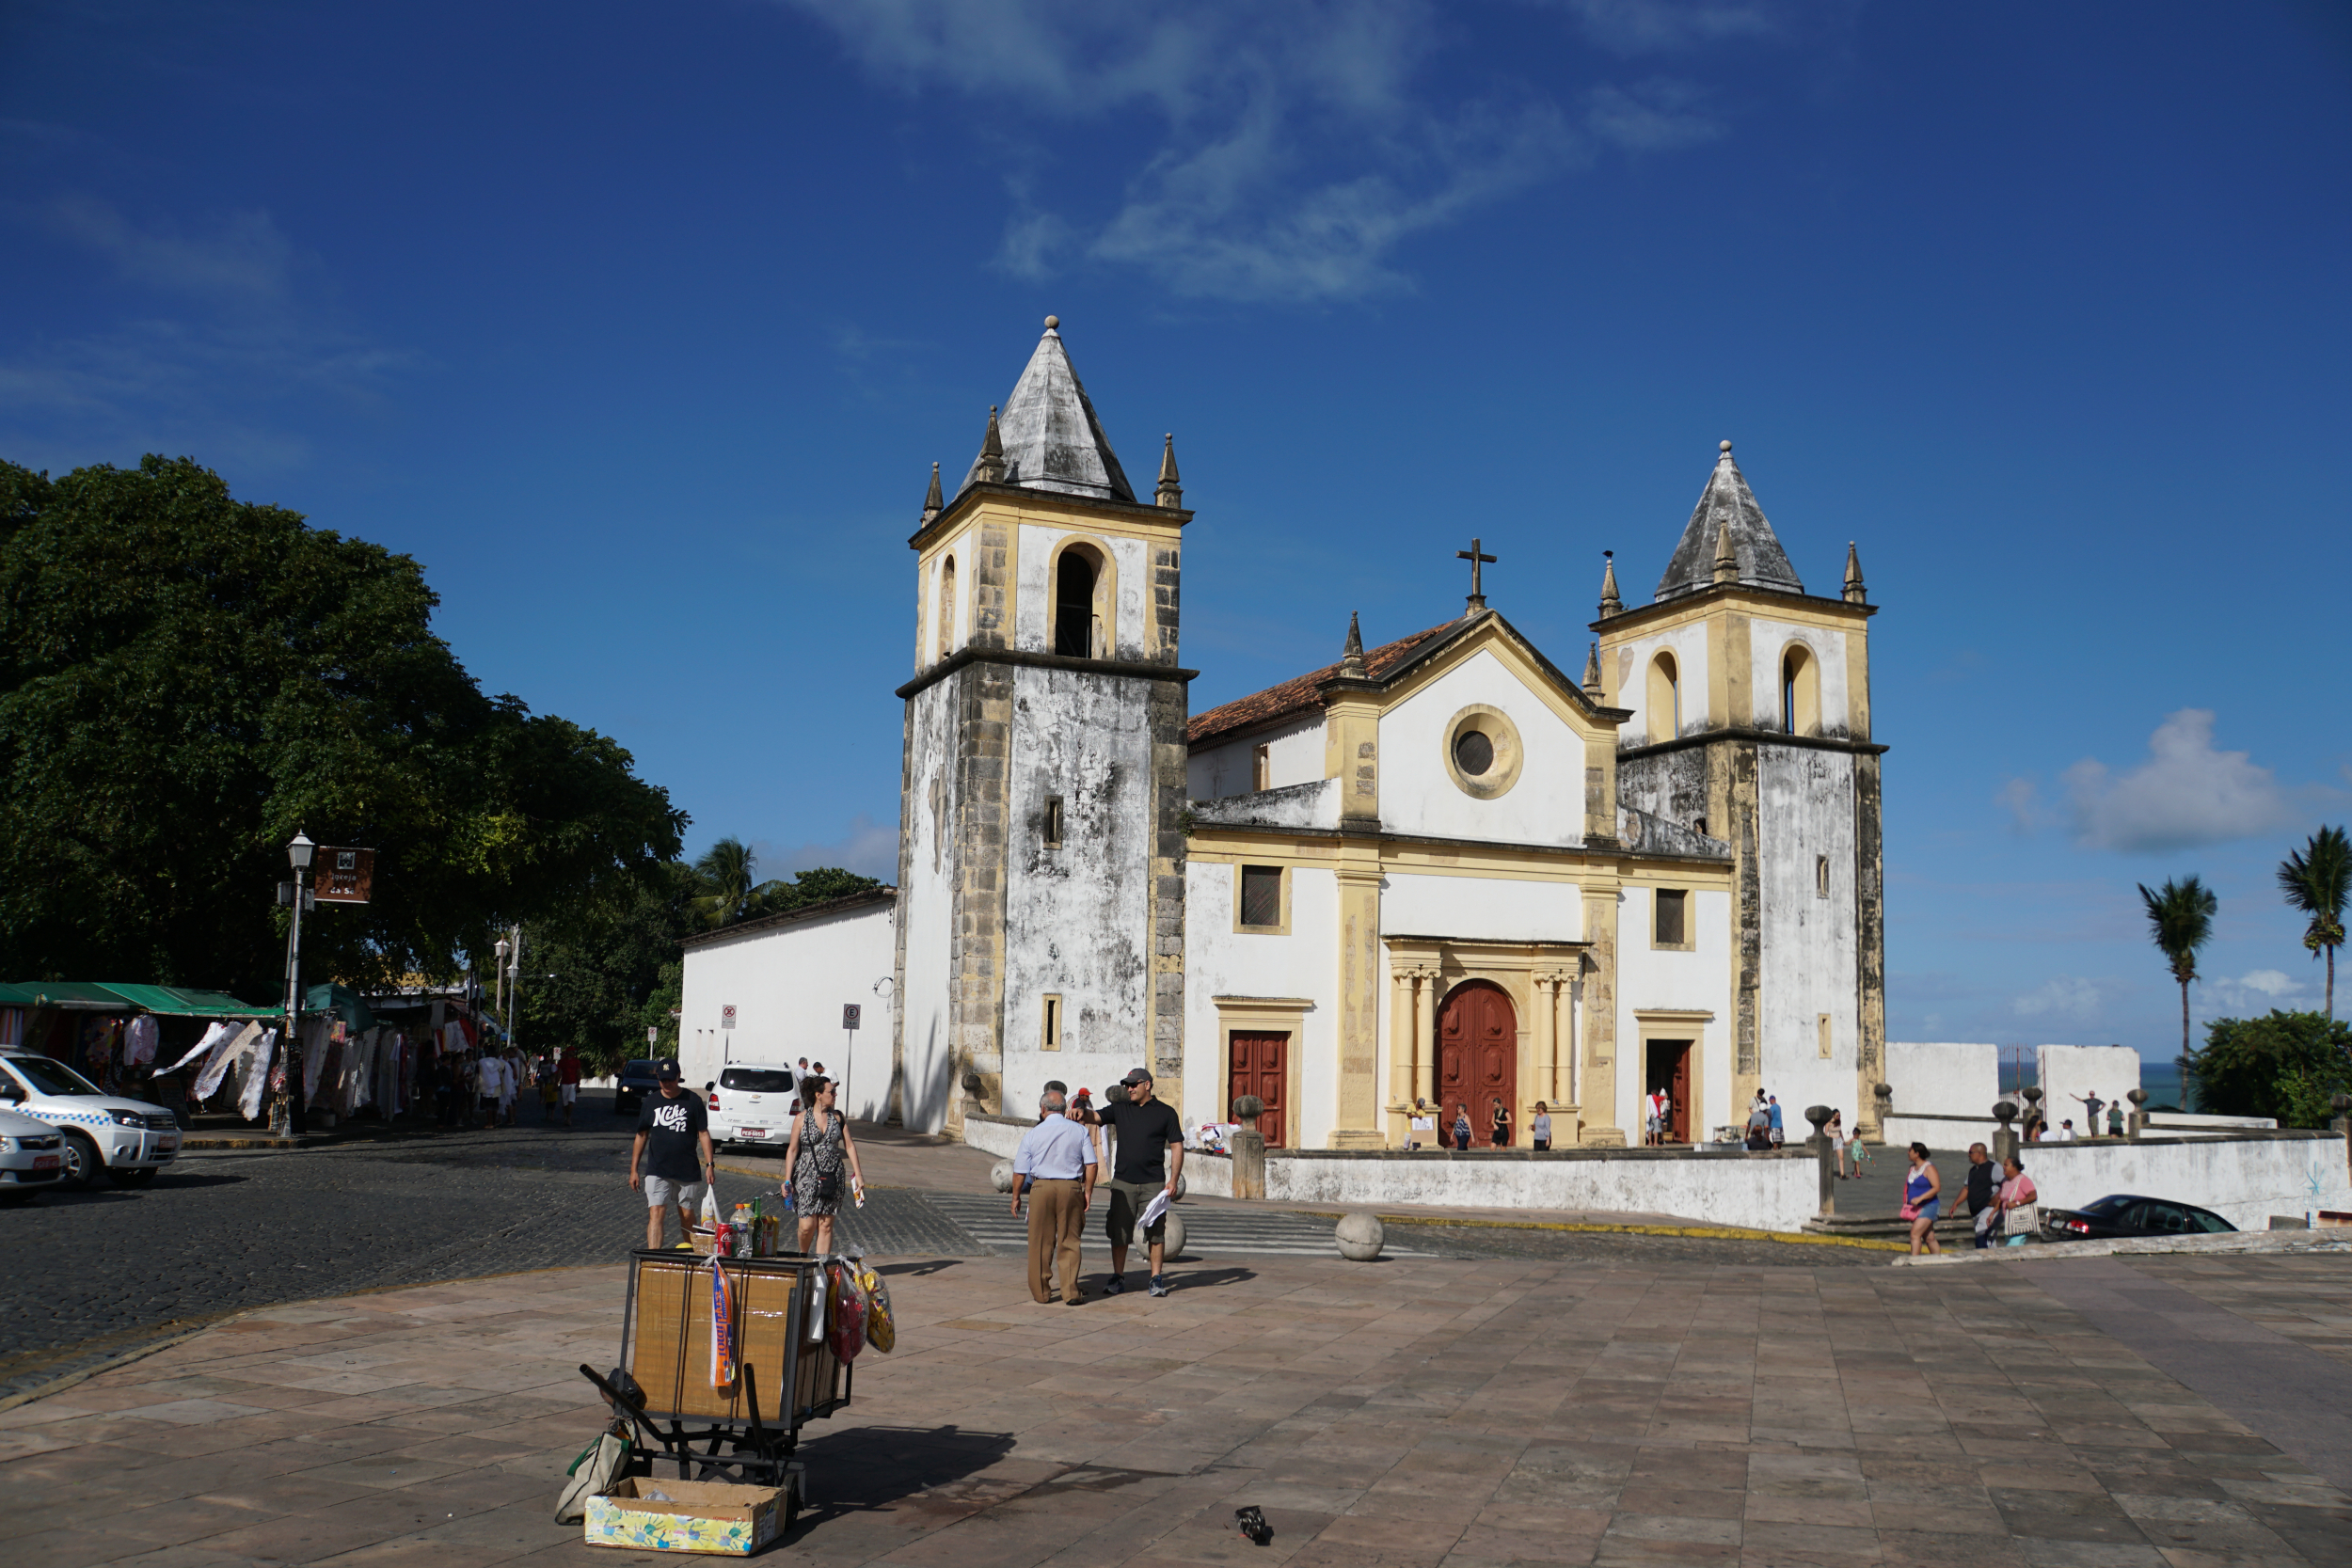 5. One of the many churches in Olinda